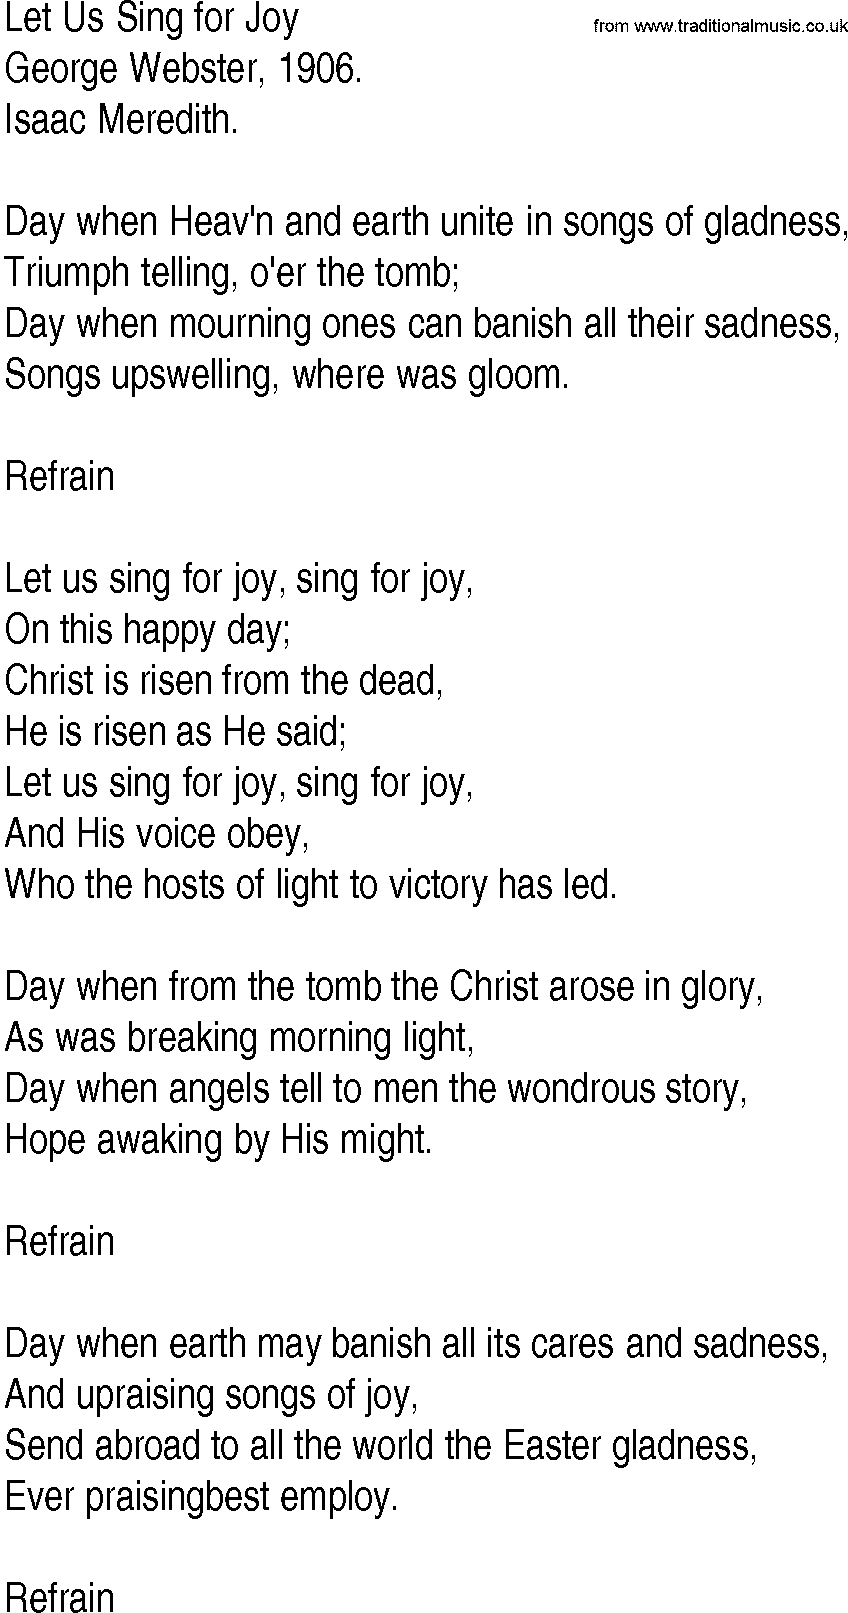 Hymn and Gospel Song: Let Us Sing for Joy by George Webster lyrics